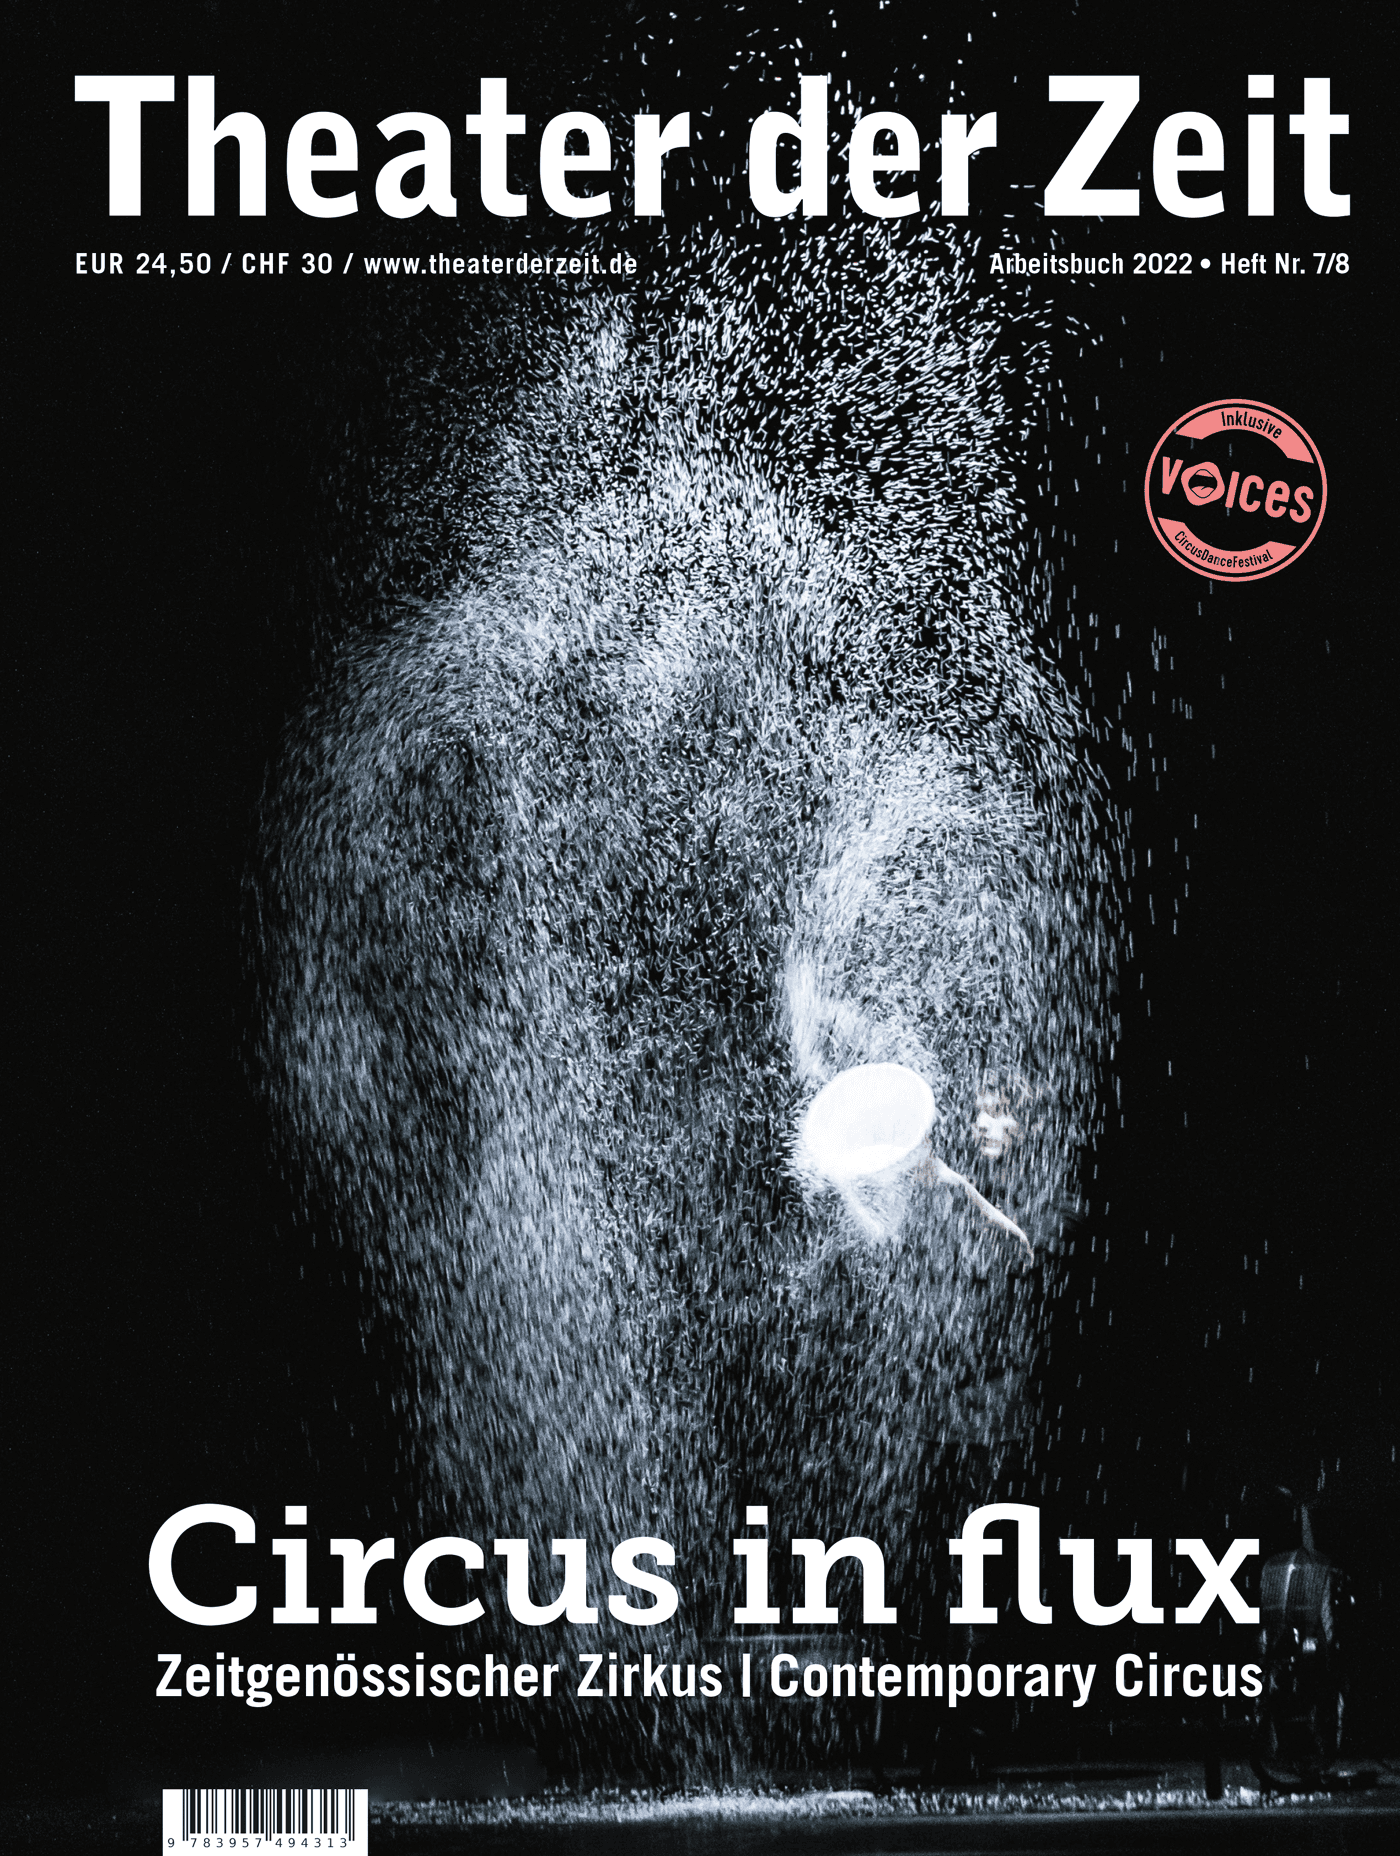 Arbeitsbuch 31 "Circus in flux"